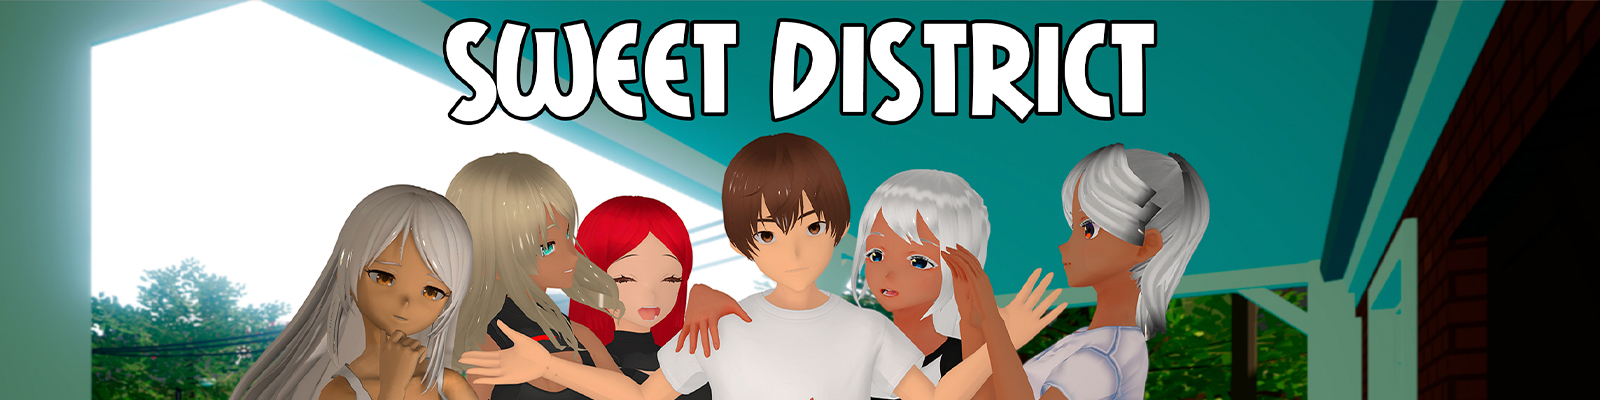 SWEET DISTRICT 3D